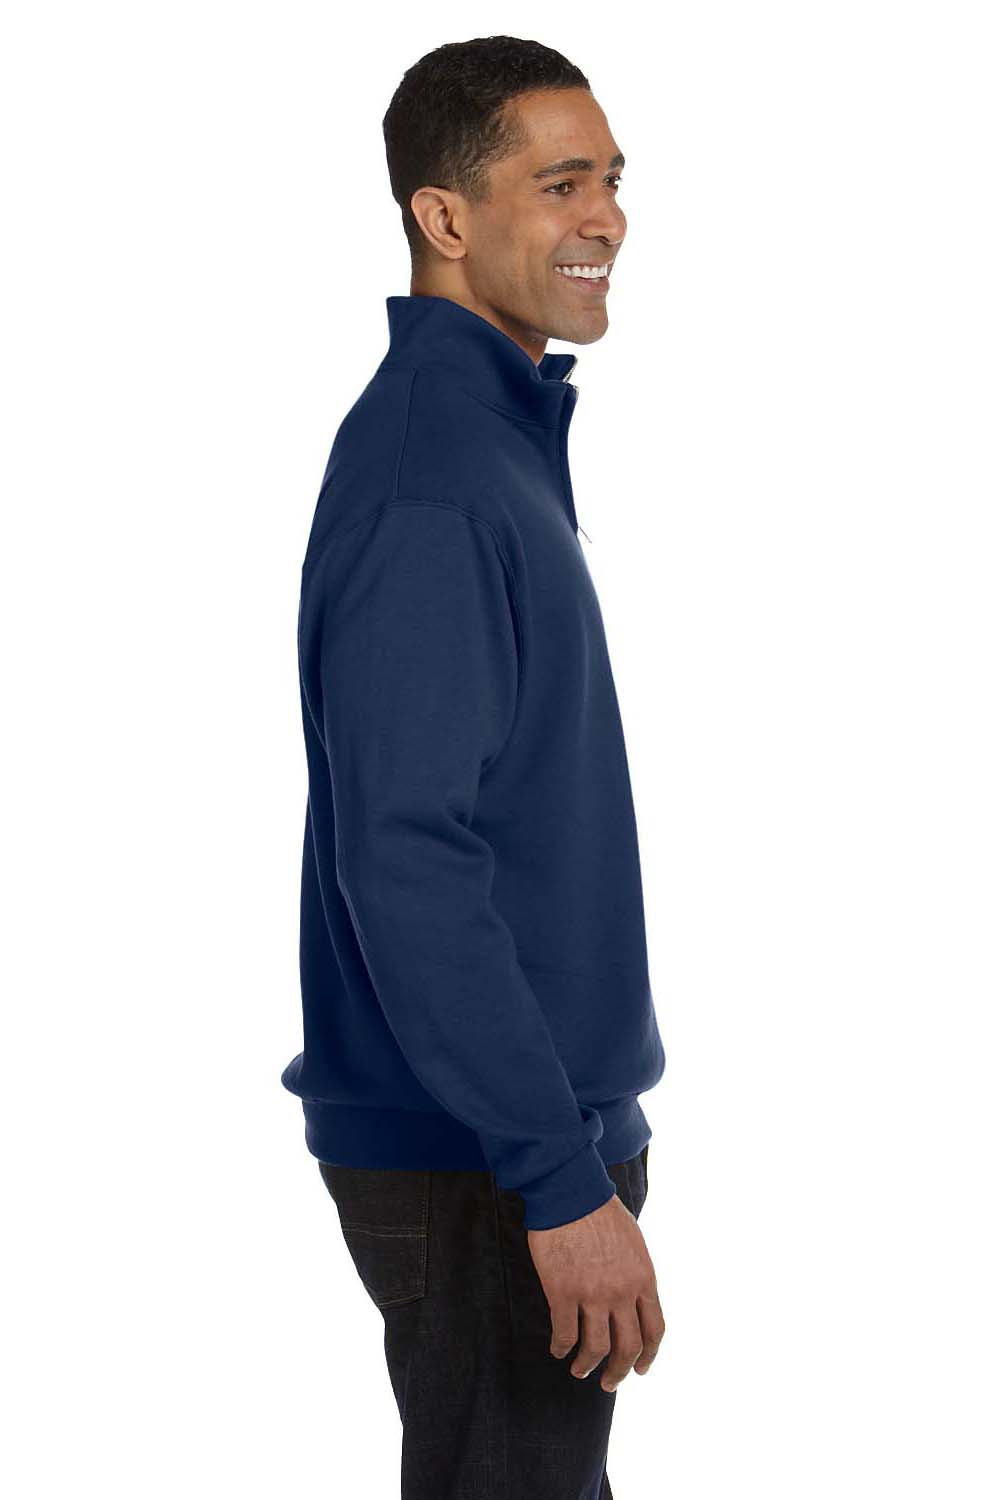 Jerzees 995M Mens NuBlend Fleece 1/4 Zip Sweatshirt Navy Blue Side